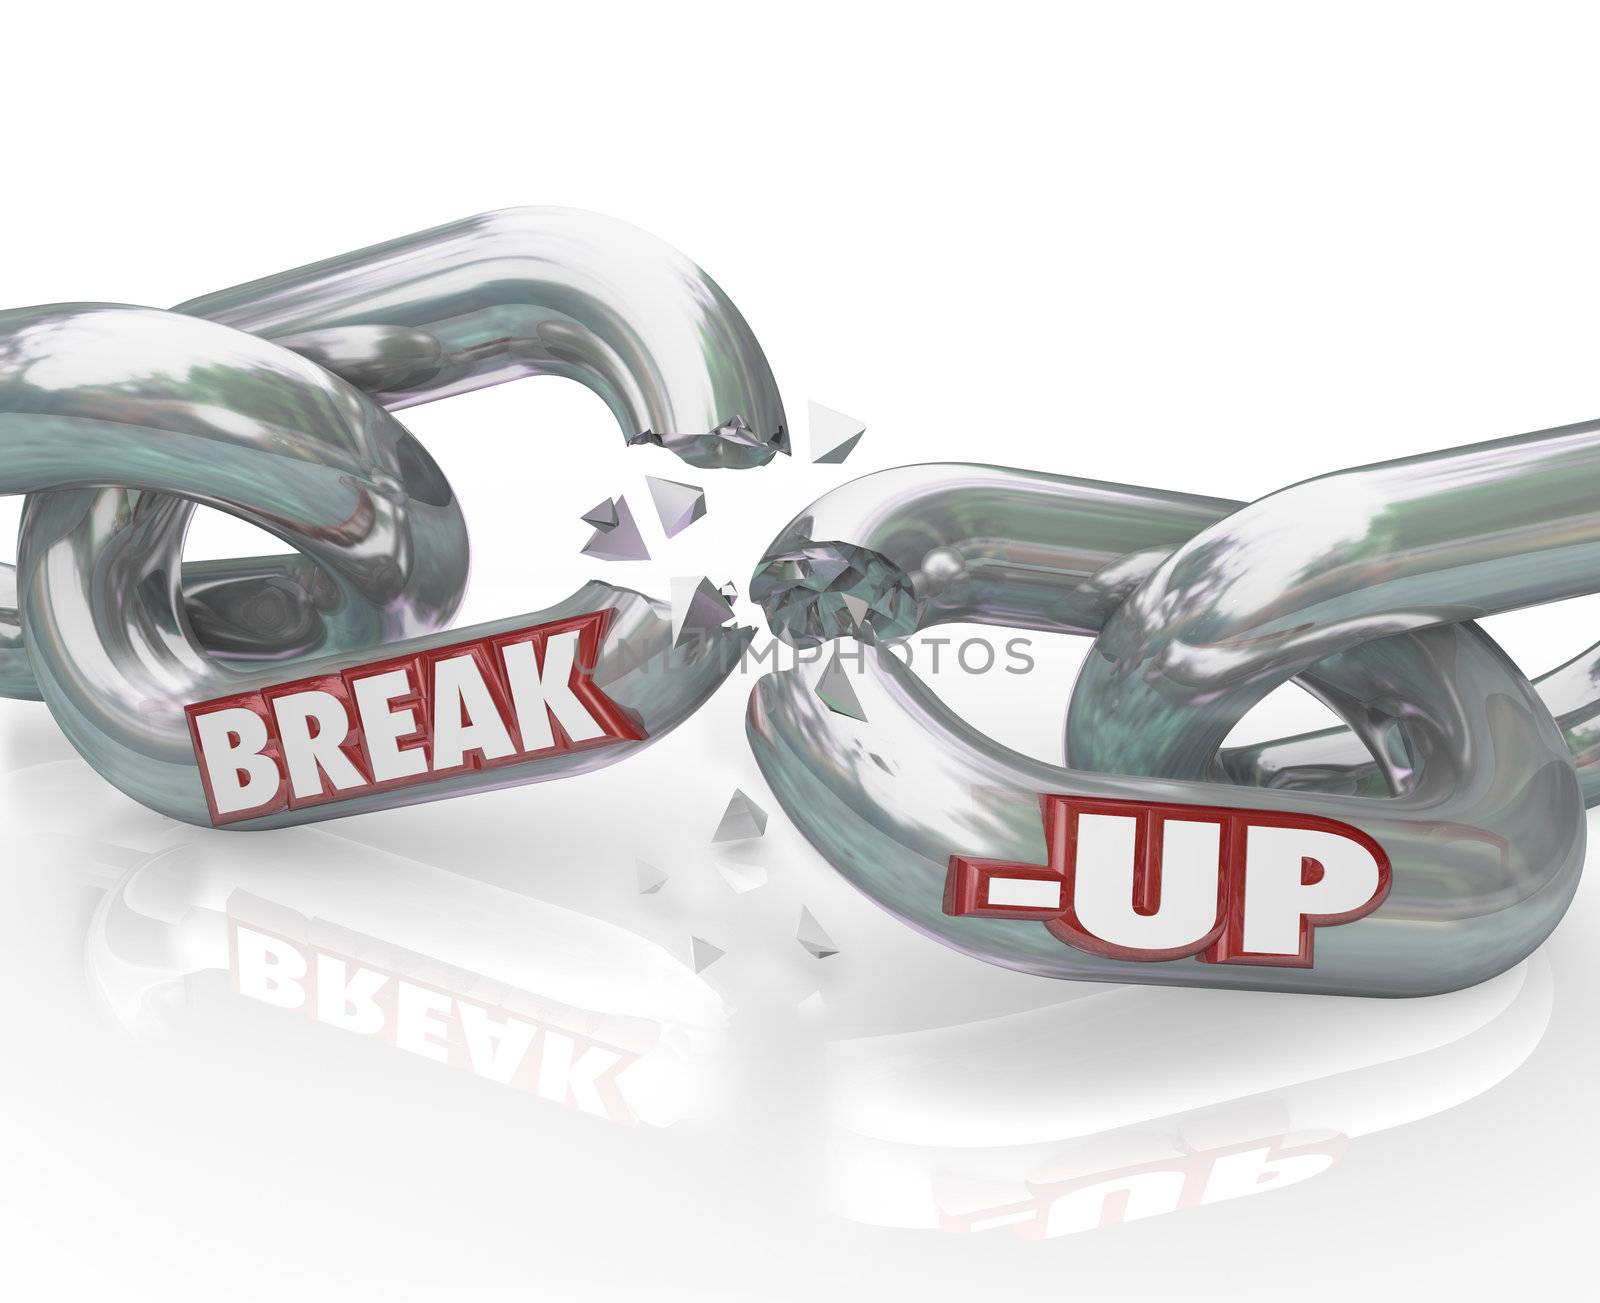 Break-Up Broken Links Chain Separation Divorce by iQoncept